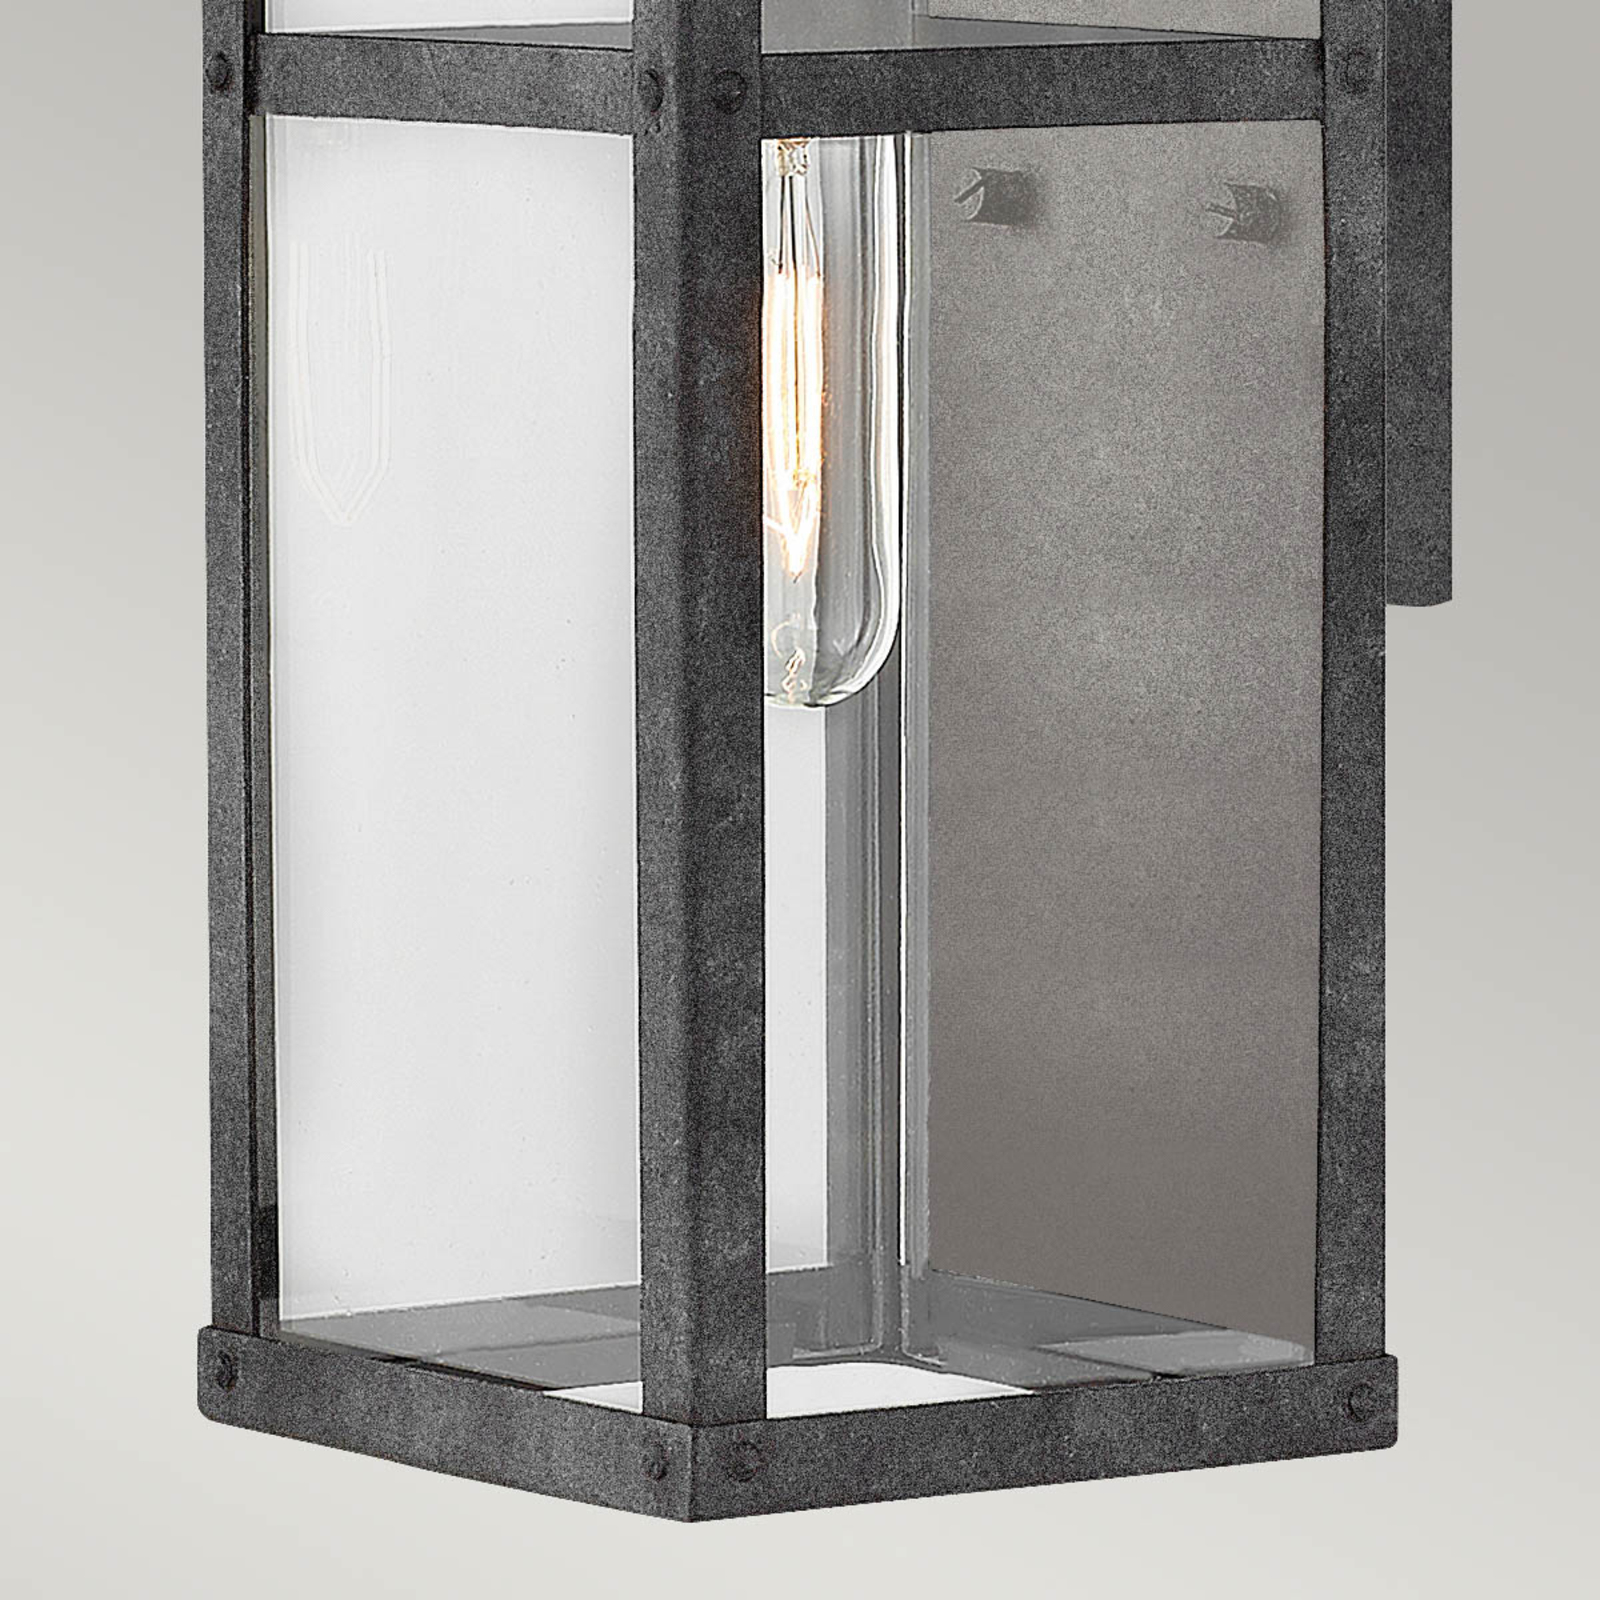 Porter outdoor wall light, black, 33.6 cm high